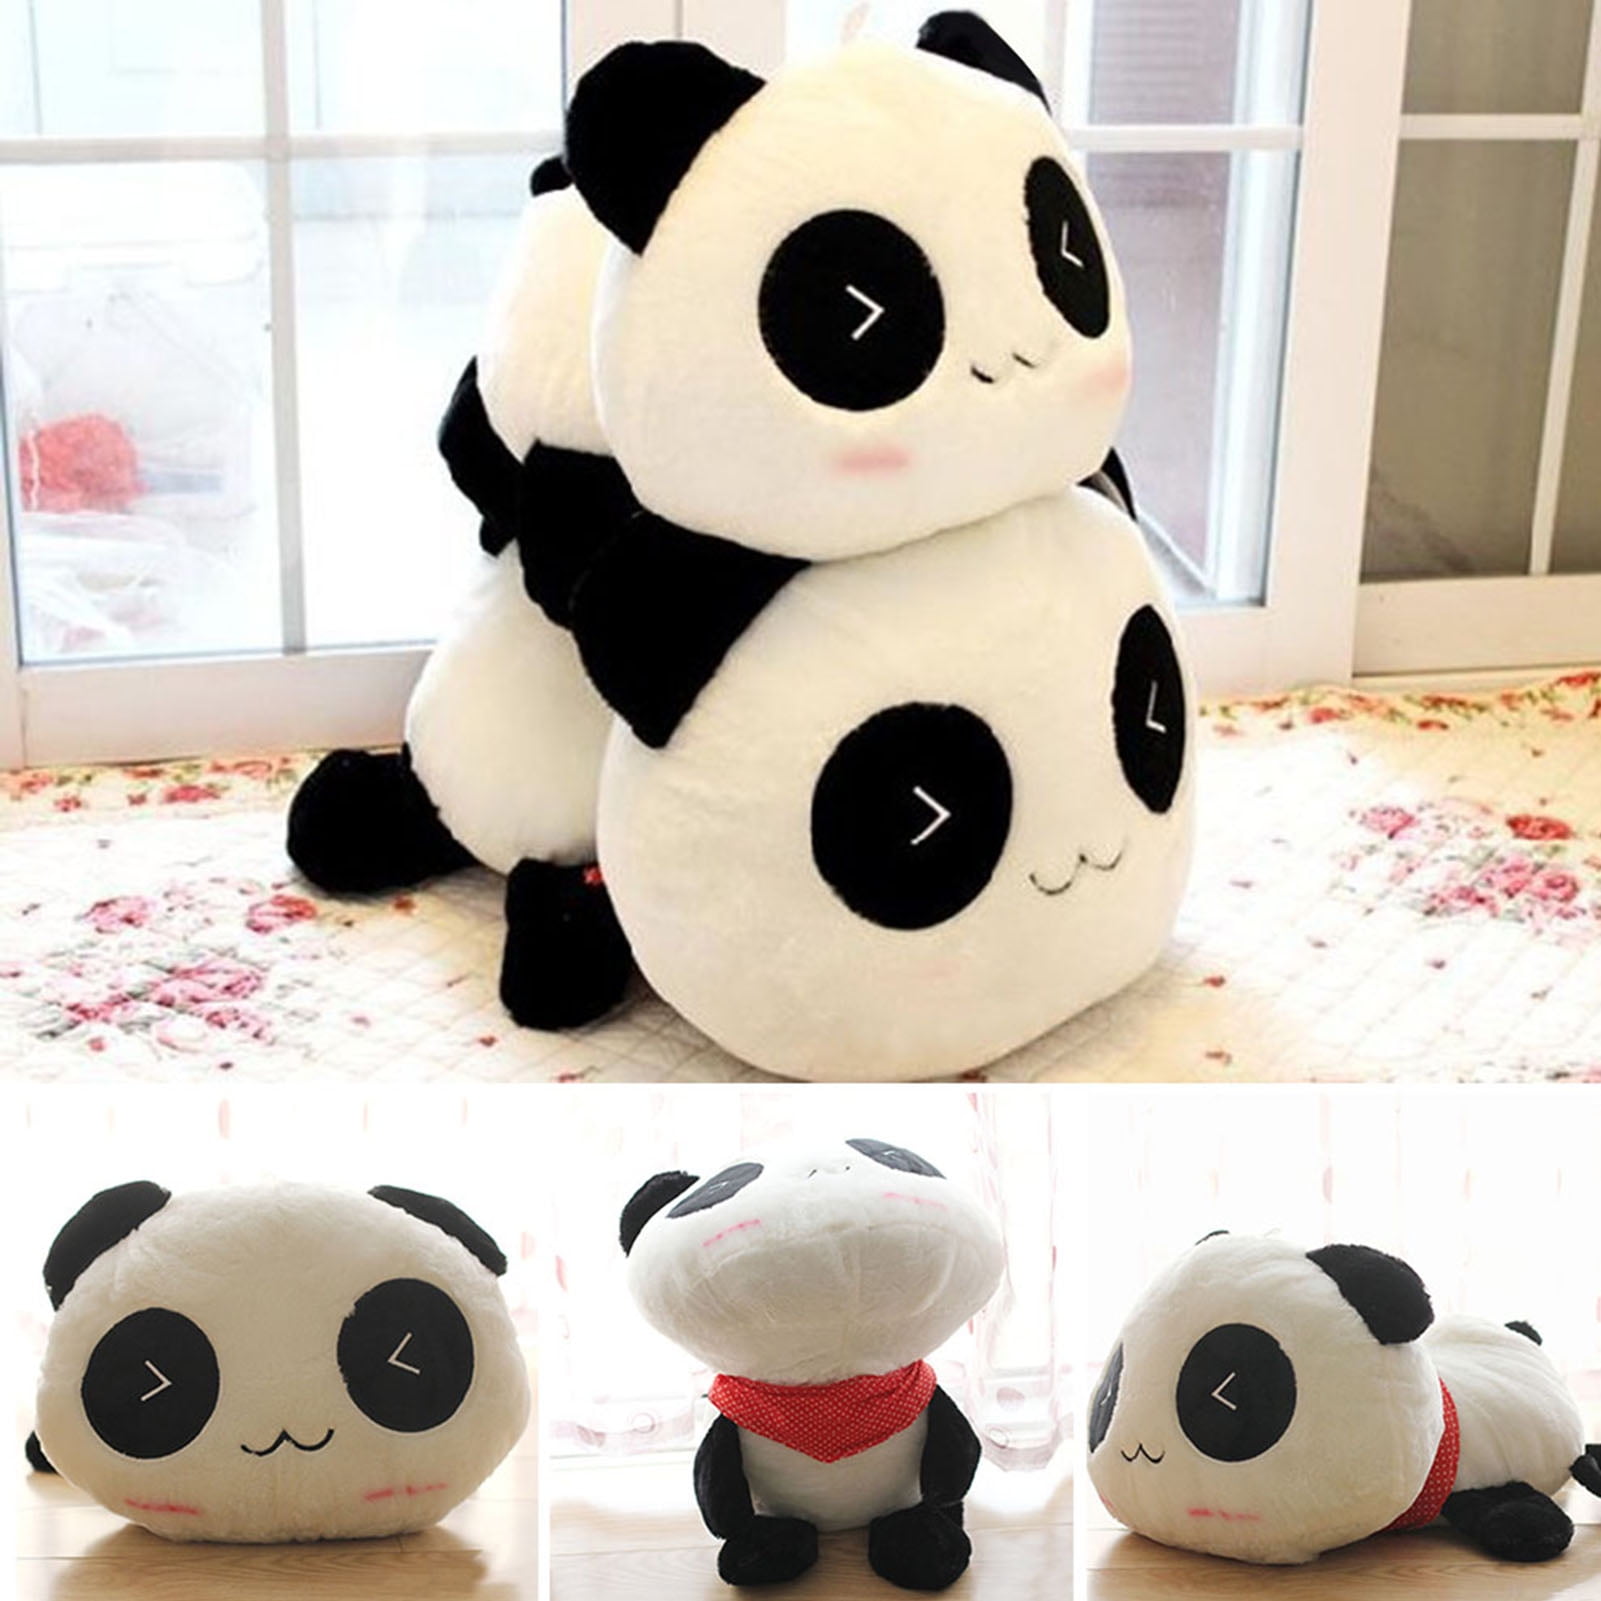 Cute Soft Plush Stuffed Panda Animal Doll Toy Pillow Holiday Gift 16 cm 